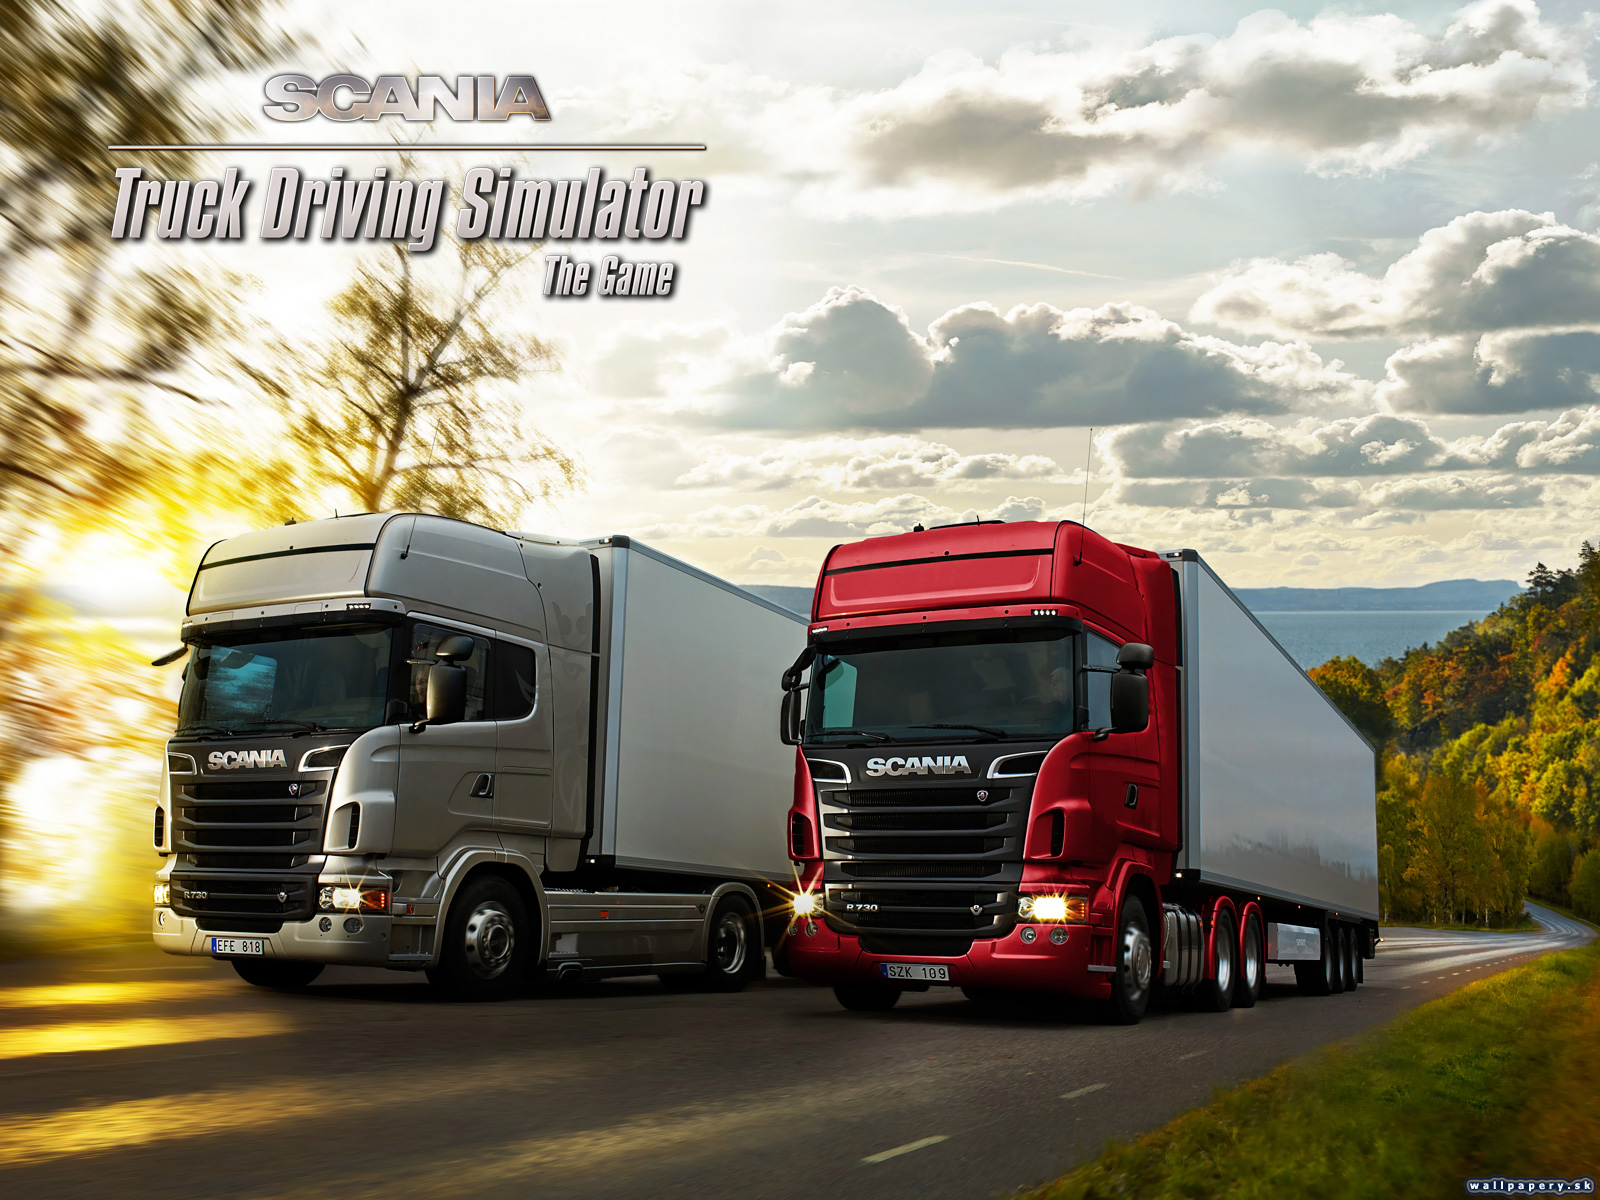 Scania Truck Driving Simulator - The Game - wallpaper 3